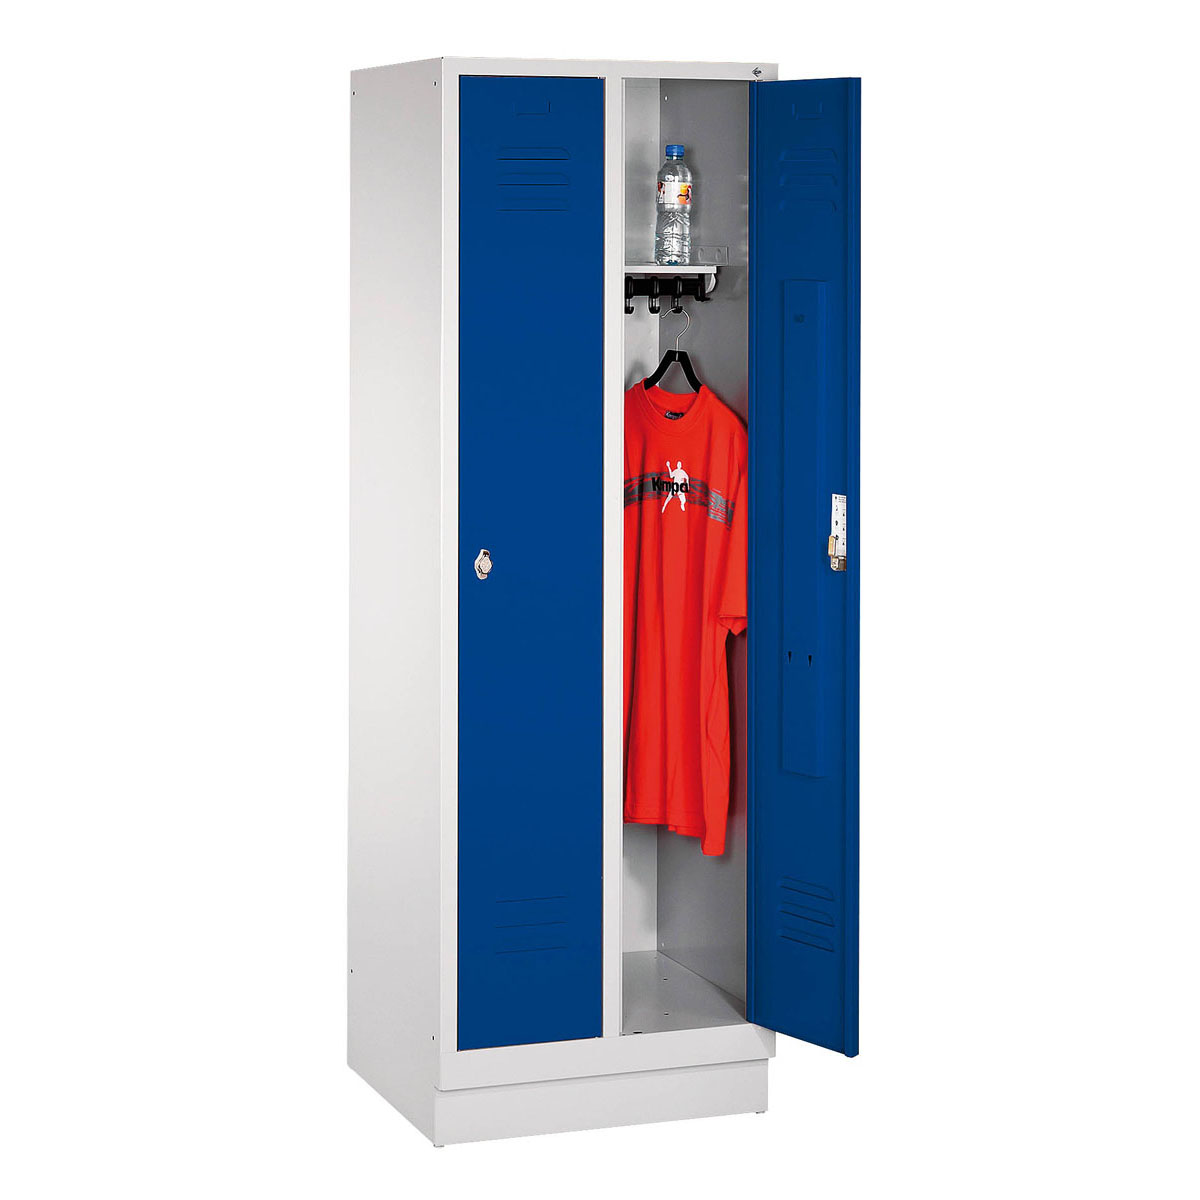 Garderobenschrank mit Sockel, rechts angeschlagene Türen, ArtNr.: CP8020